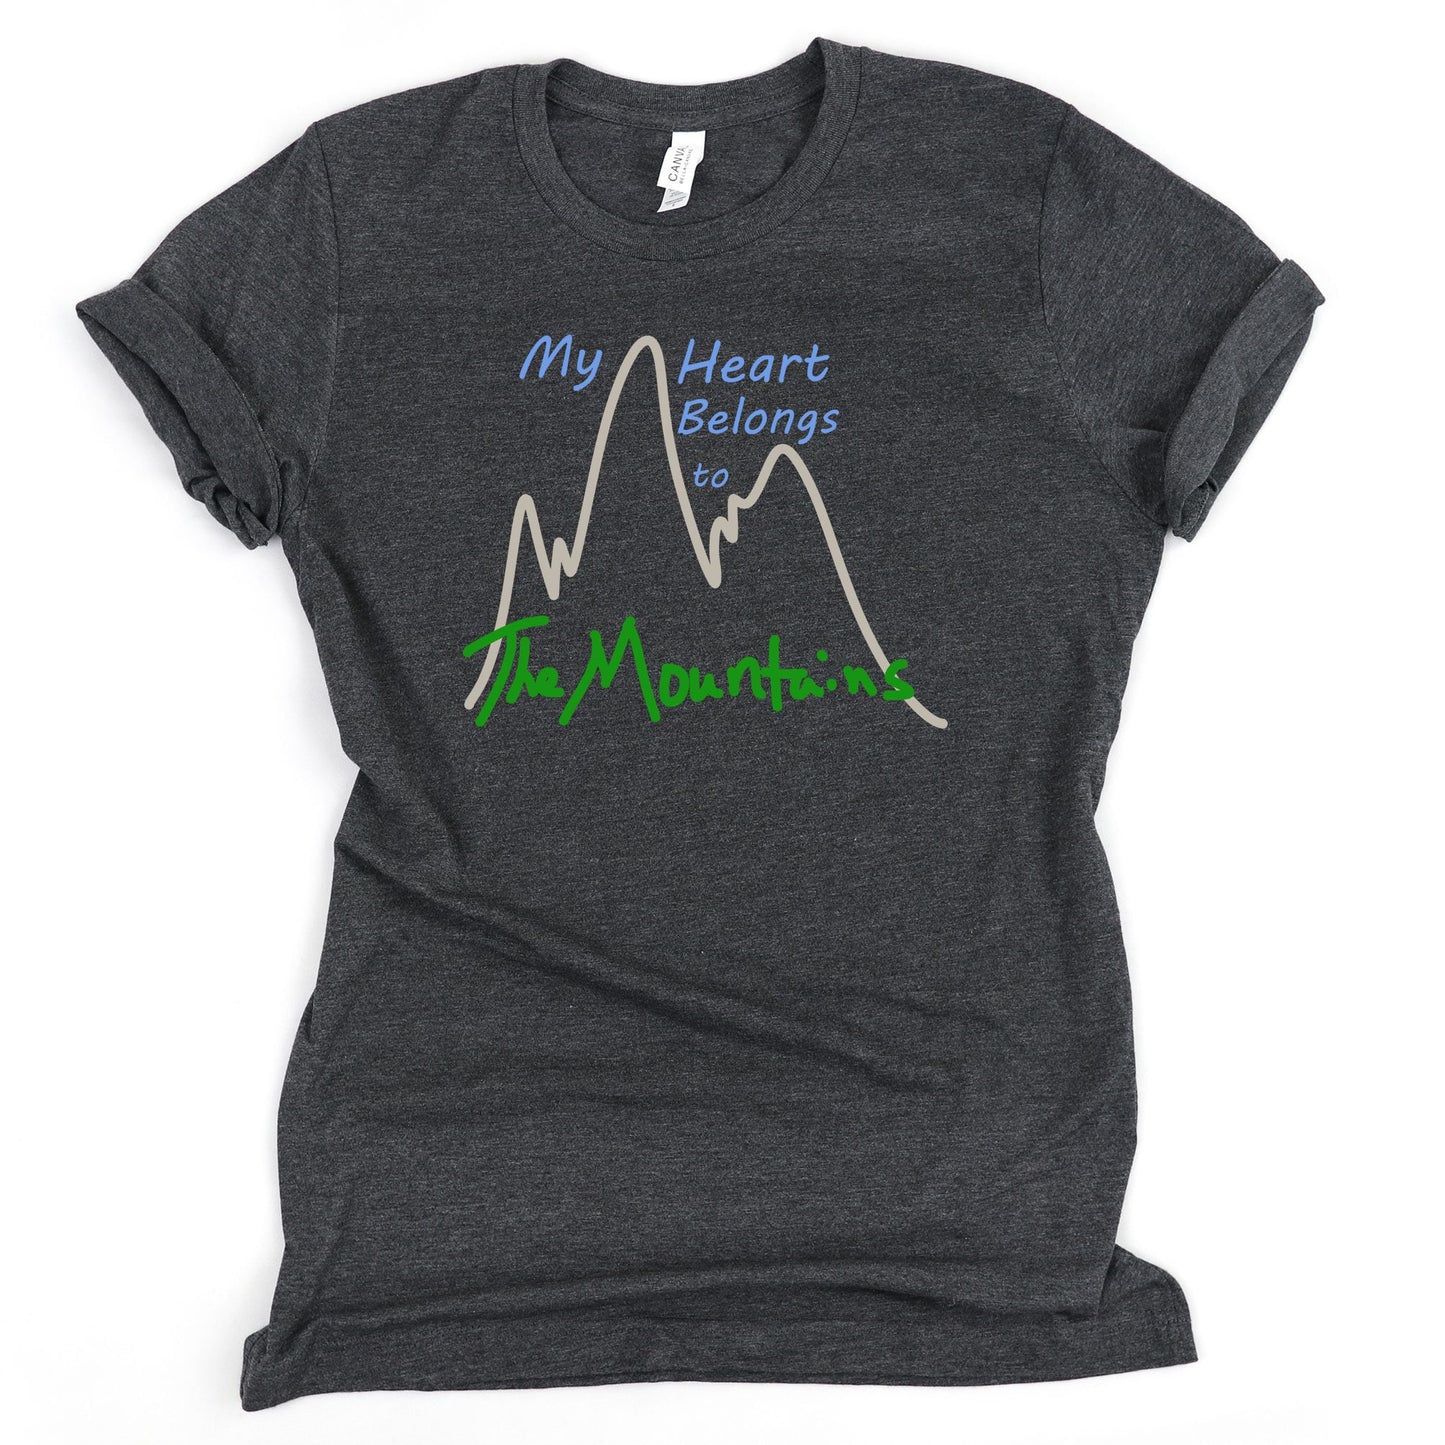 My Heart Belongs to the Mountains Shirt